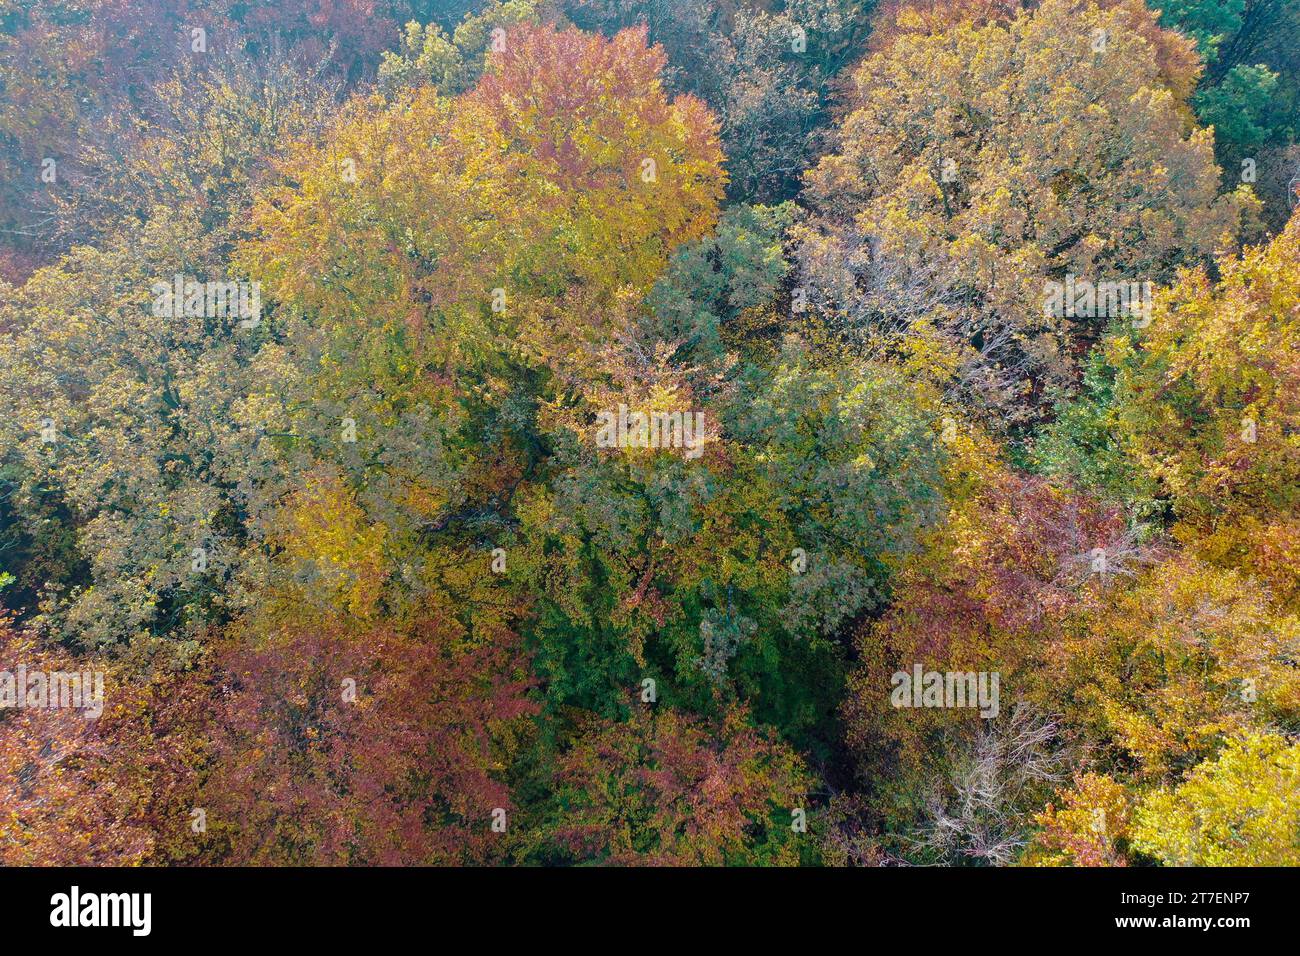 Wald von oben, Herbstwald, Herbstlaub, Herbstfärbung, Herbstverfärbung, Herbstfarben, bunt, buntes Laub, herbstlich, herbstlicher Wald, Luftaufnahme, Stock Photo